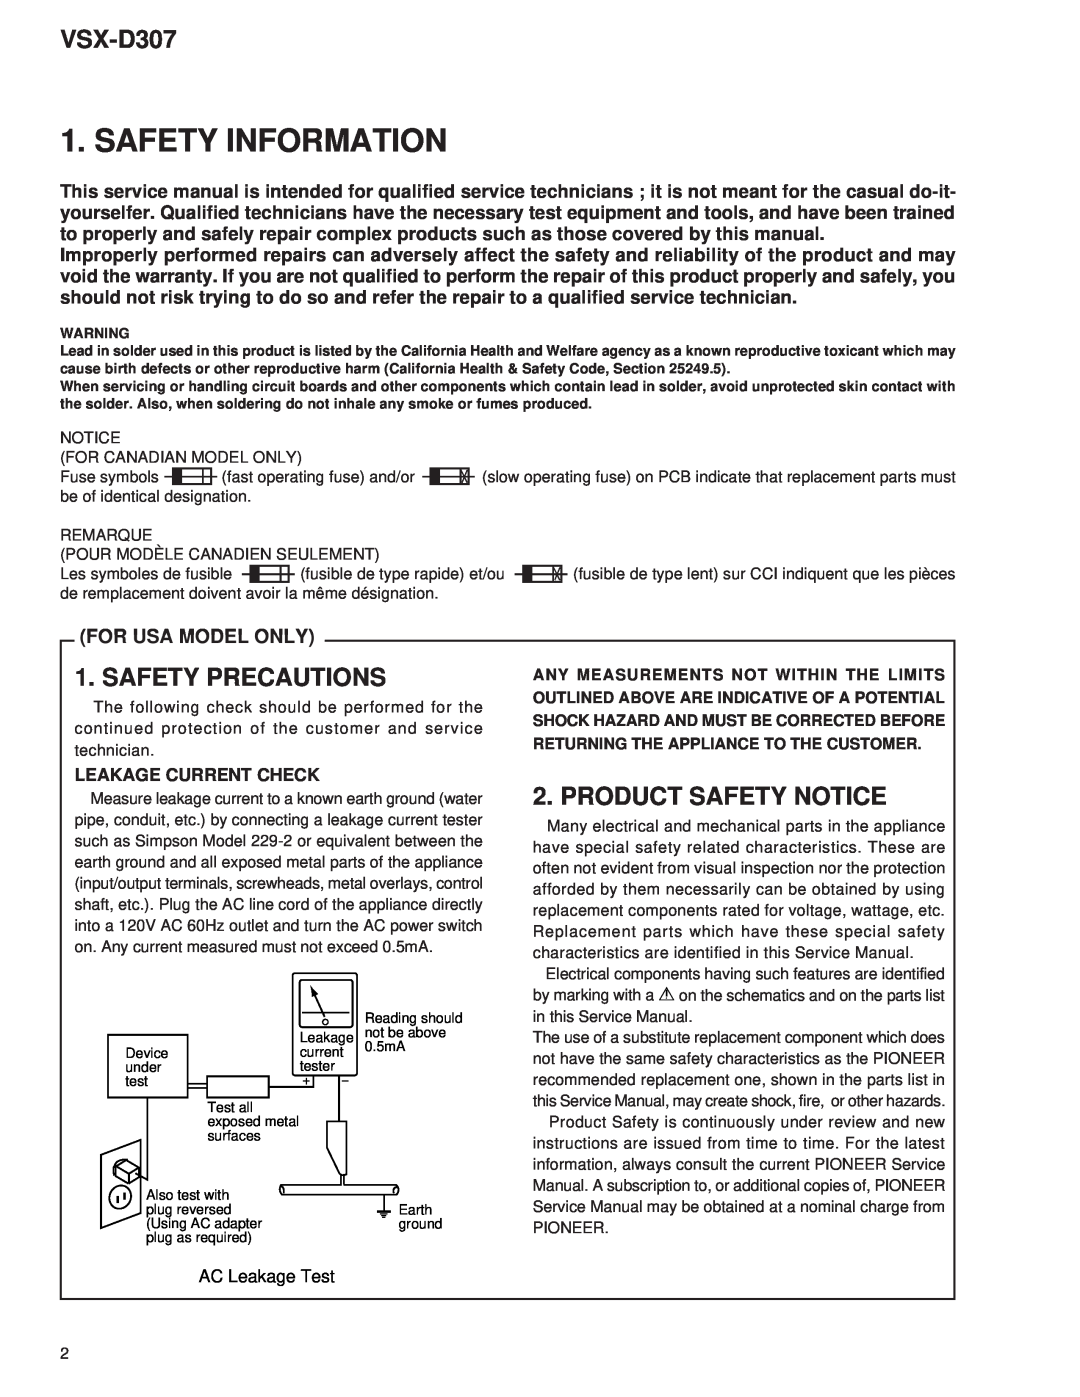 Dolby Laboratories STAV-3770 Safety Information, VSX-D307, Safety Precautions, Product Safety Notice, AC Leakage Test 